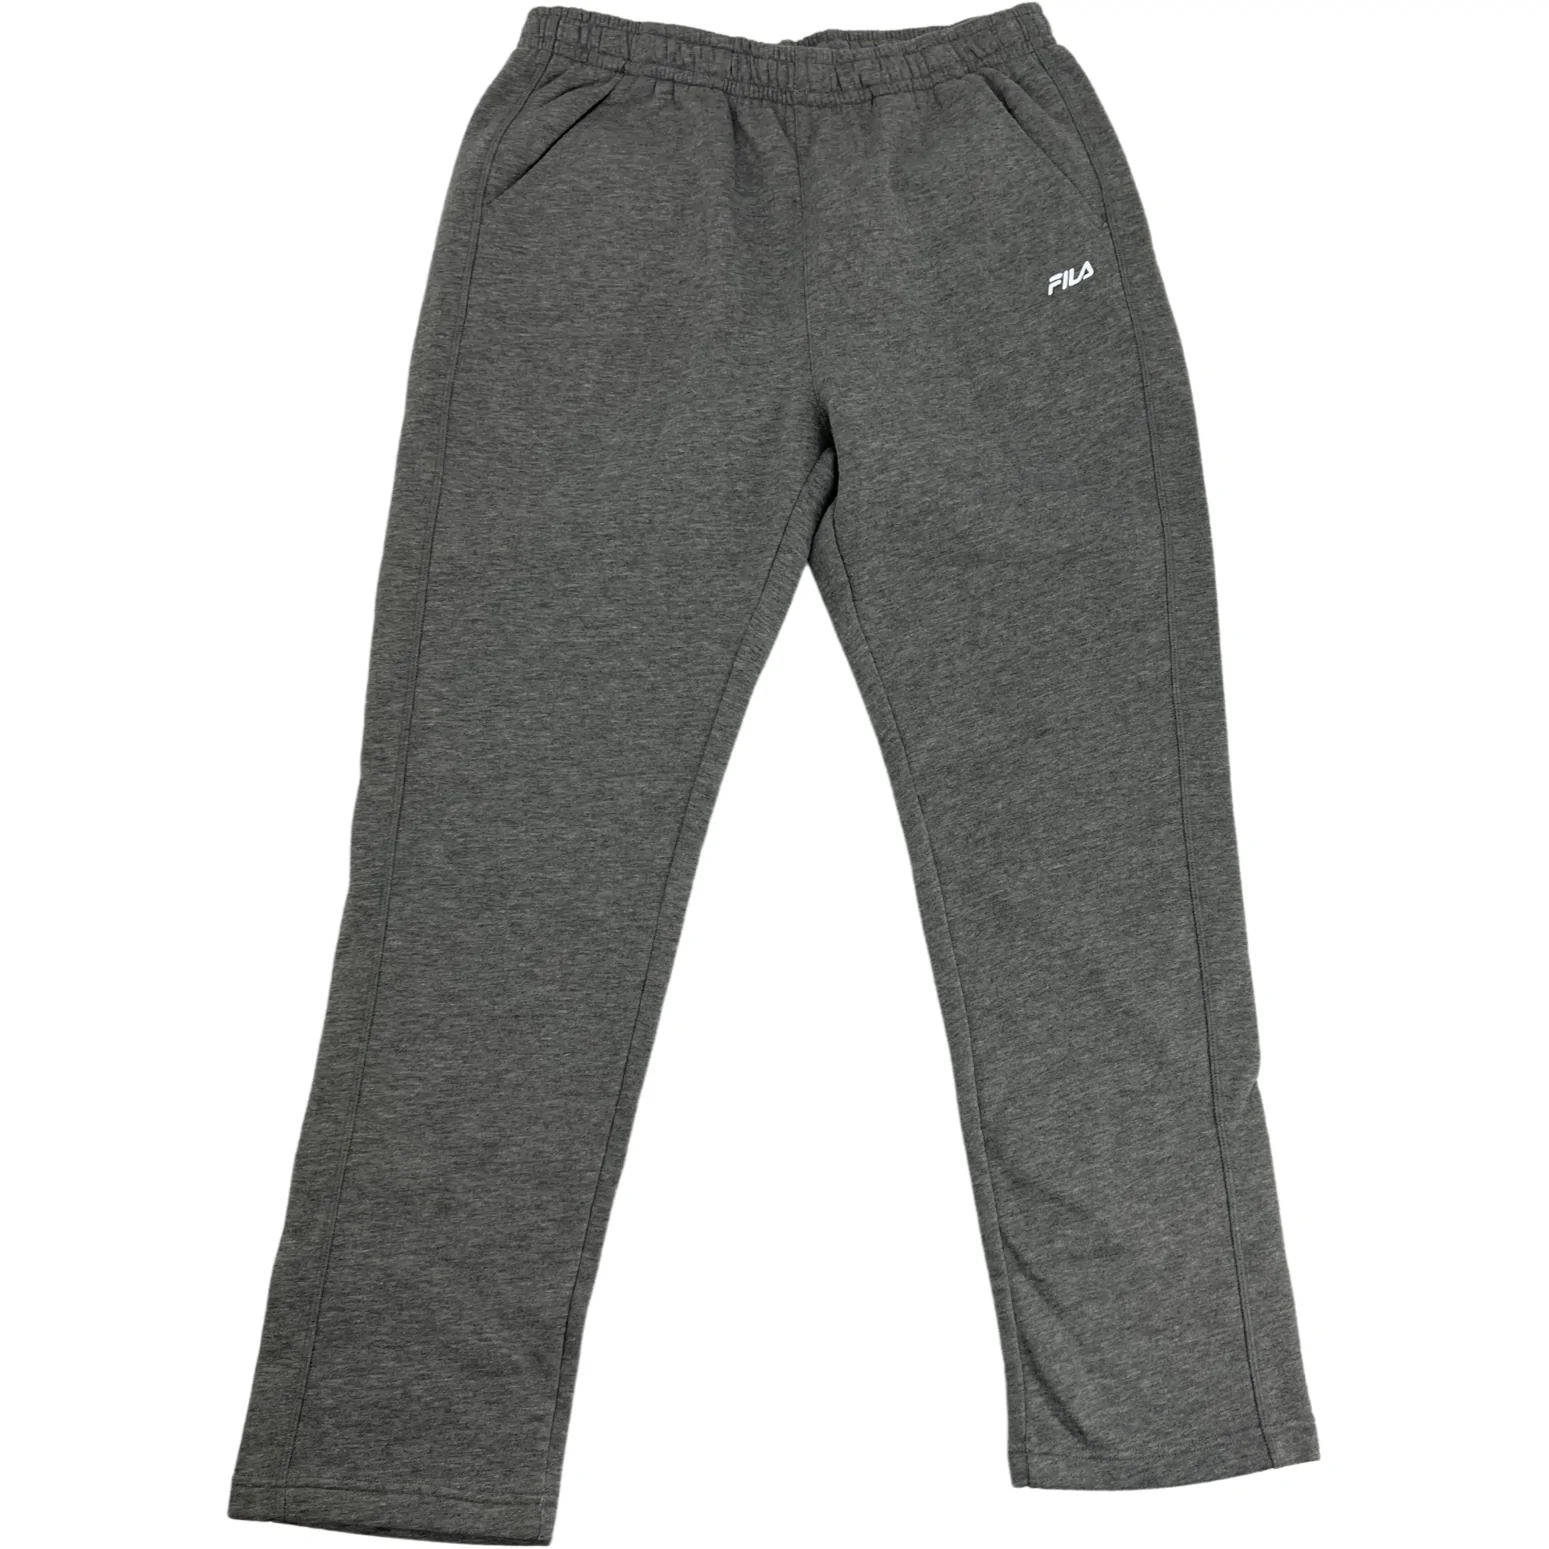 Fila Men's Fleece Pant: Grey / Size Large